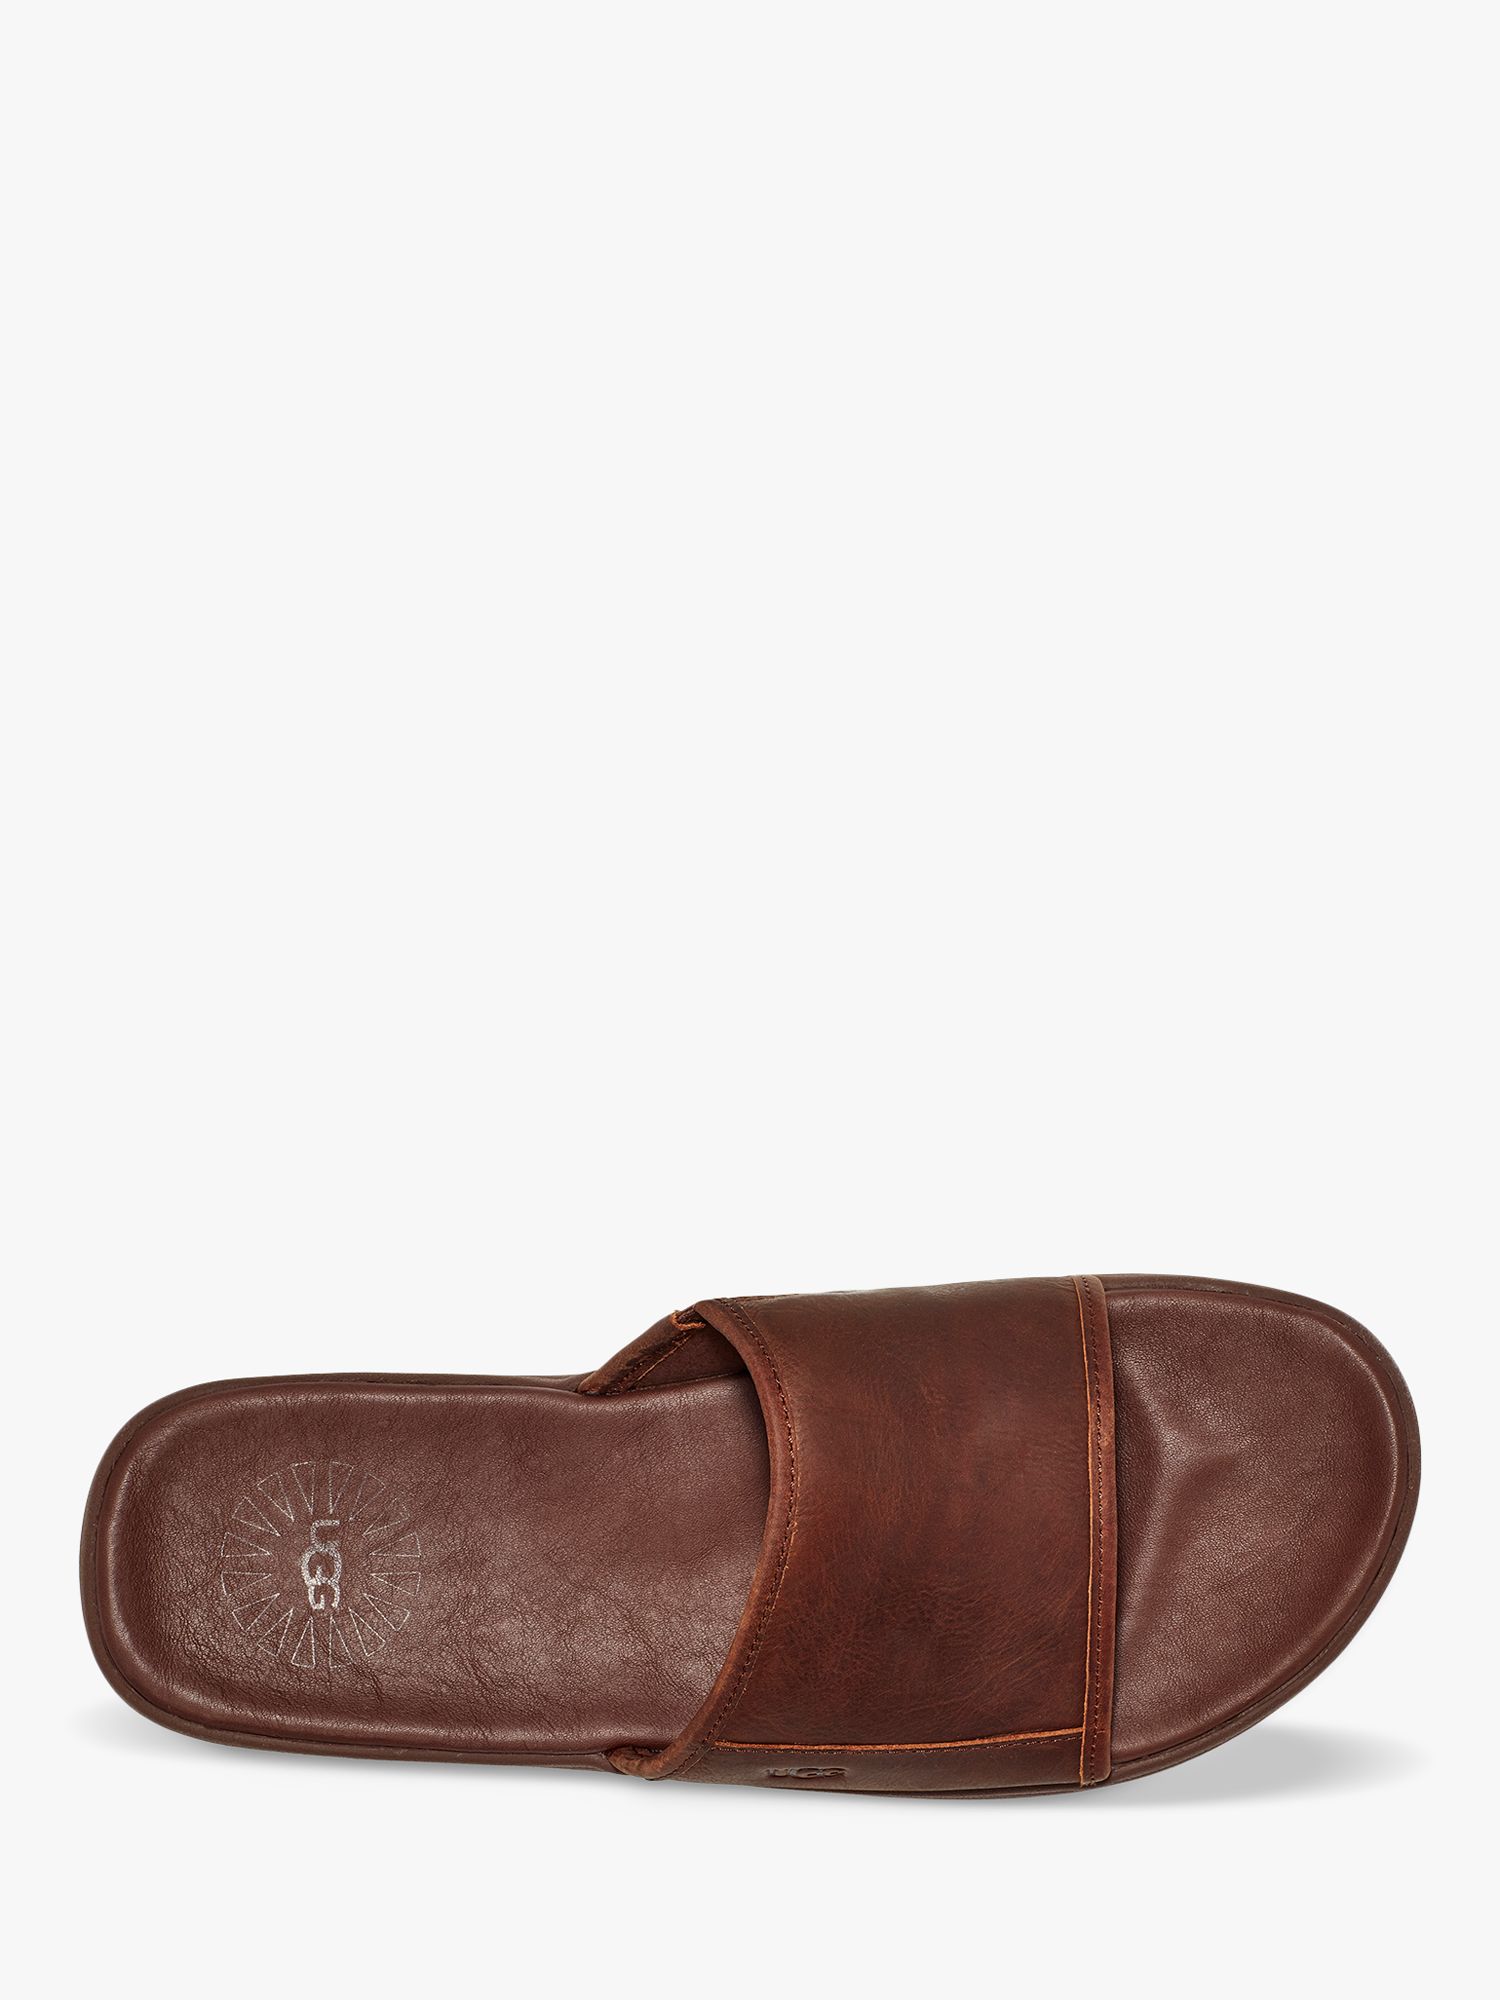 UGG Seaside Leather Slider Sandals, Luggage, 7